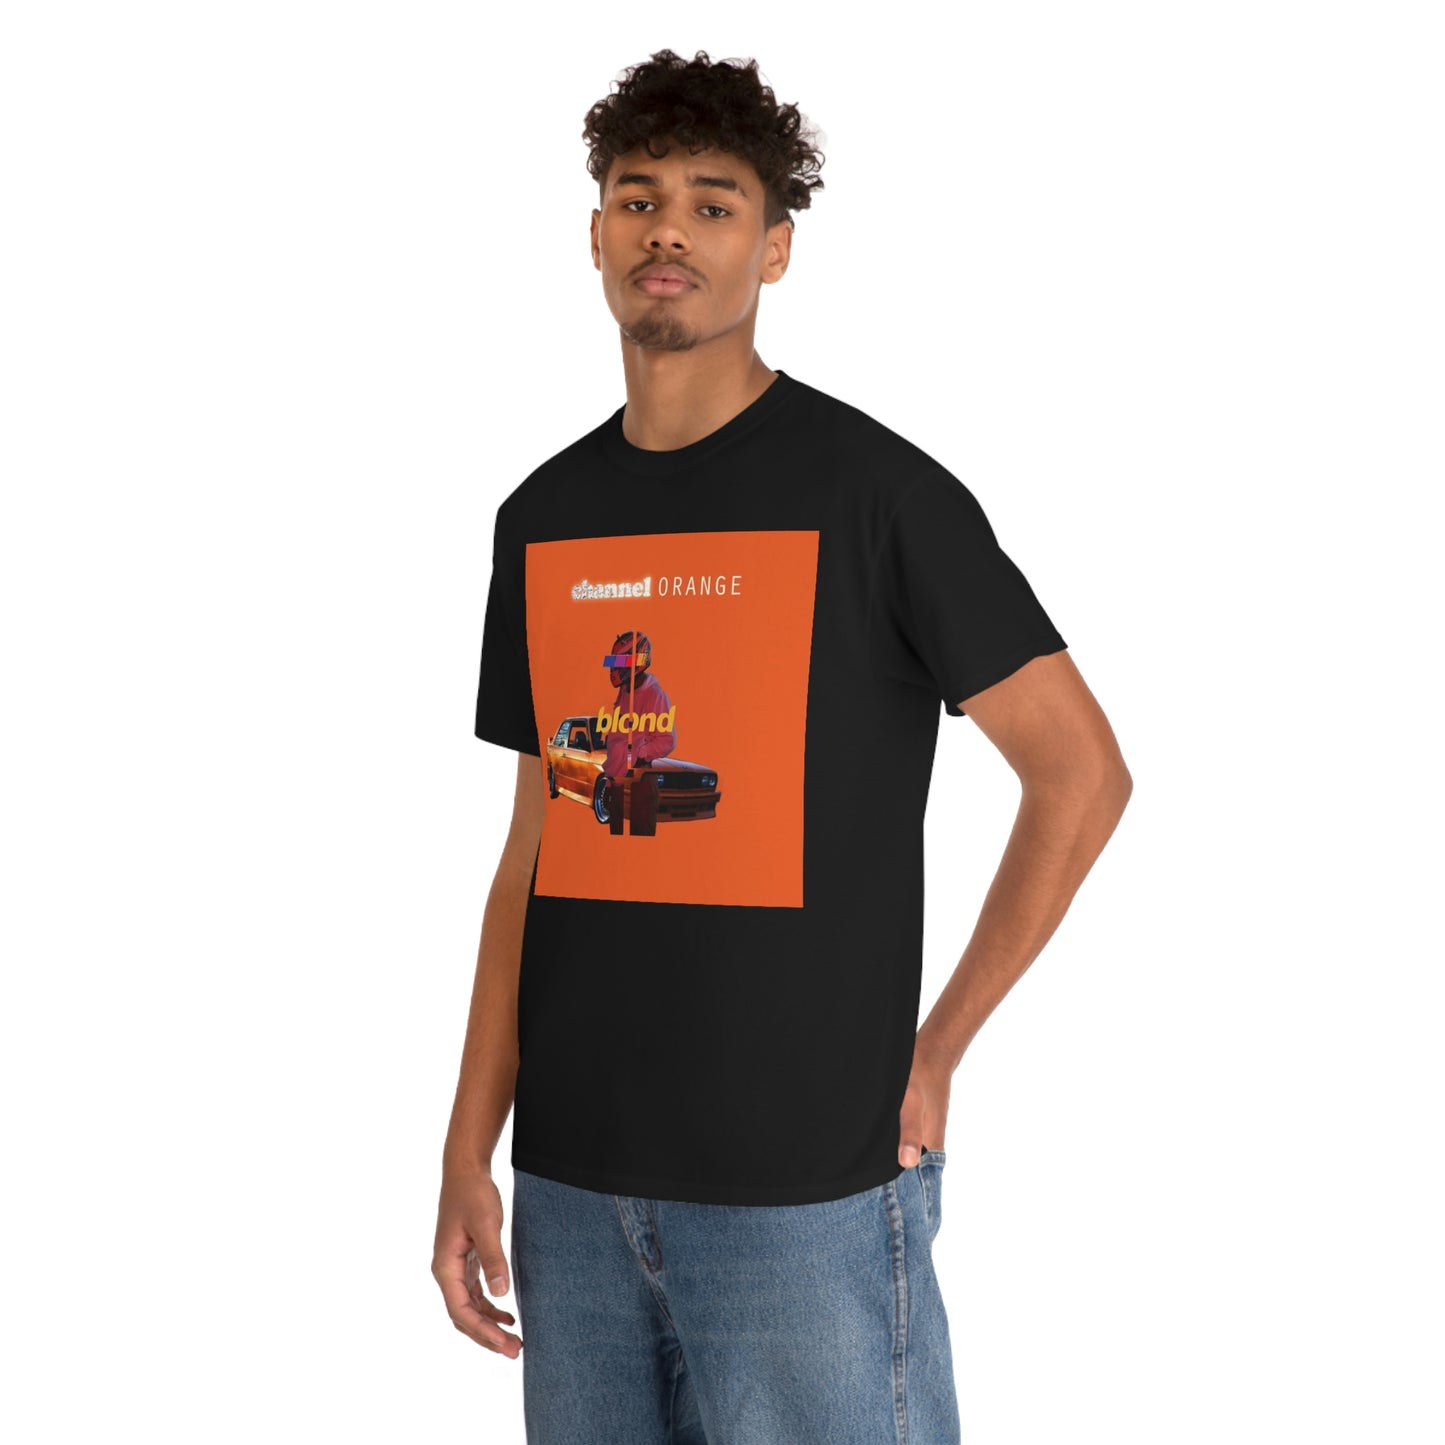 Orange Blond Printed T-Shirts | Unisex Black T-Shirts | RetroTeeShop